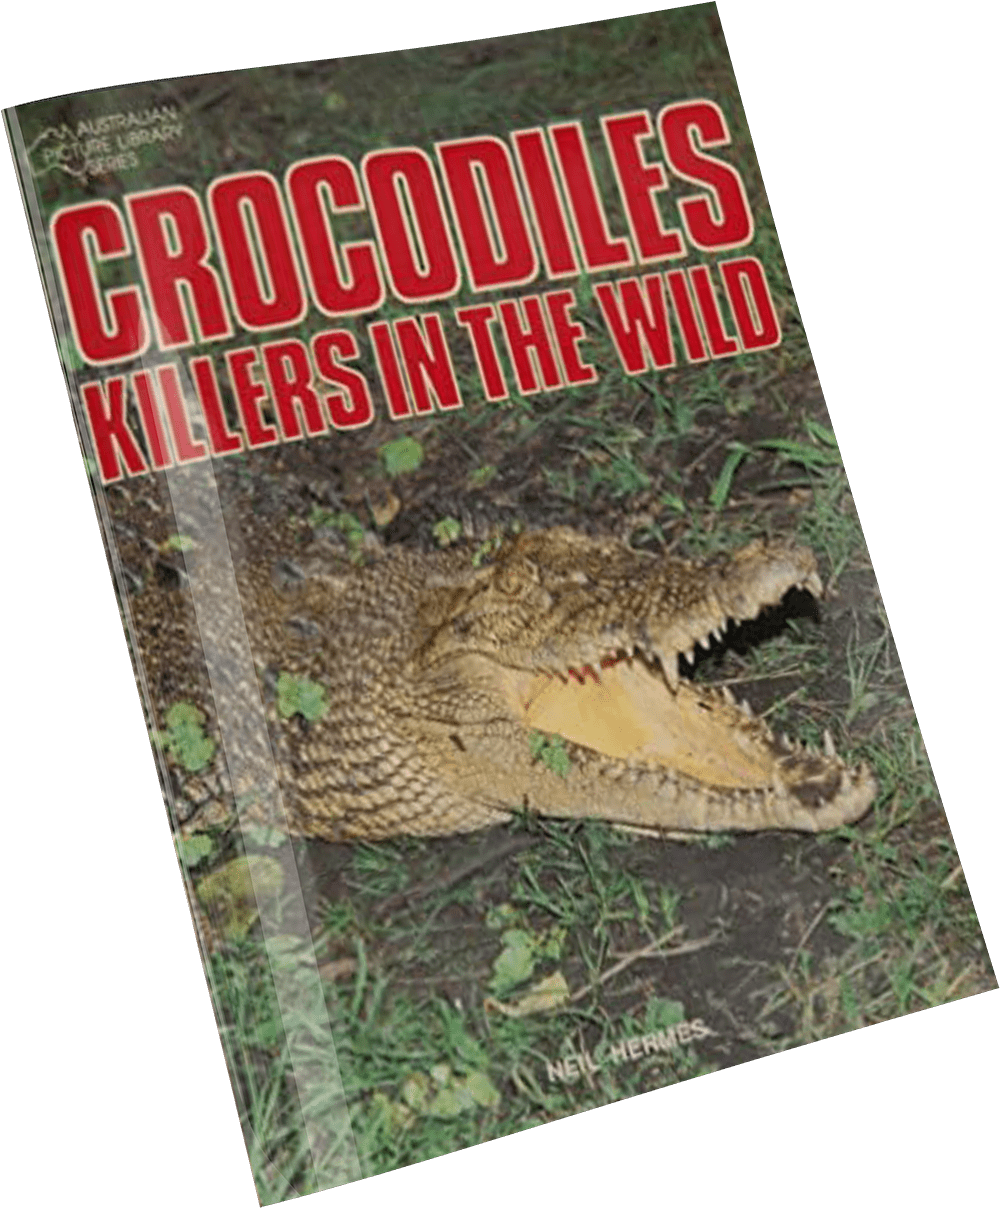 Neil Hermes Book: Crocodiles: Killers in the Wild